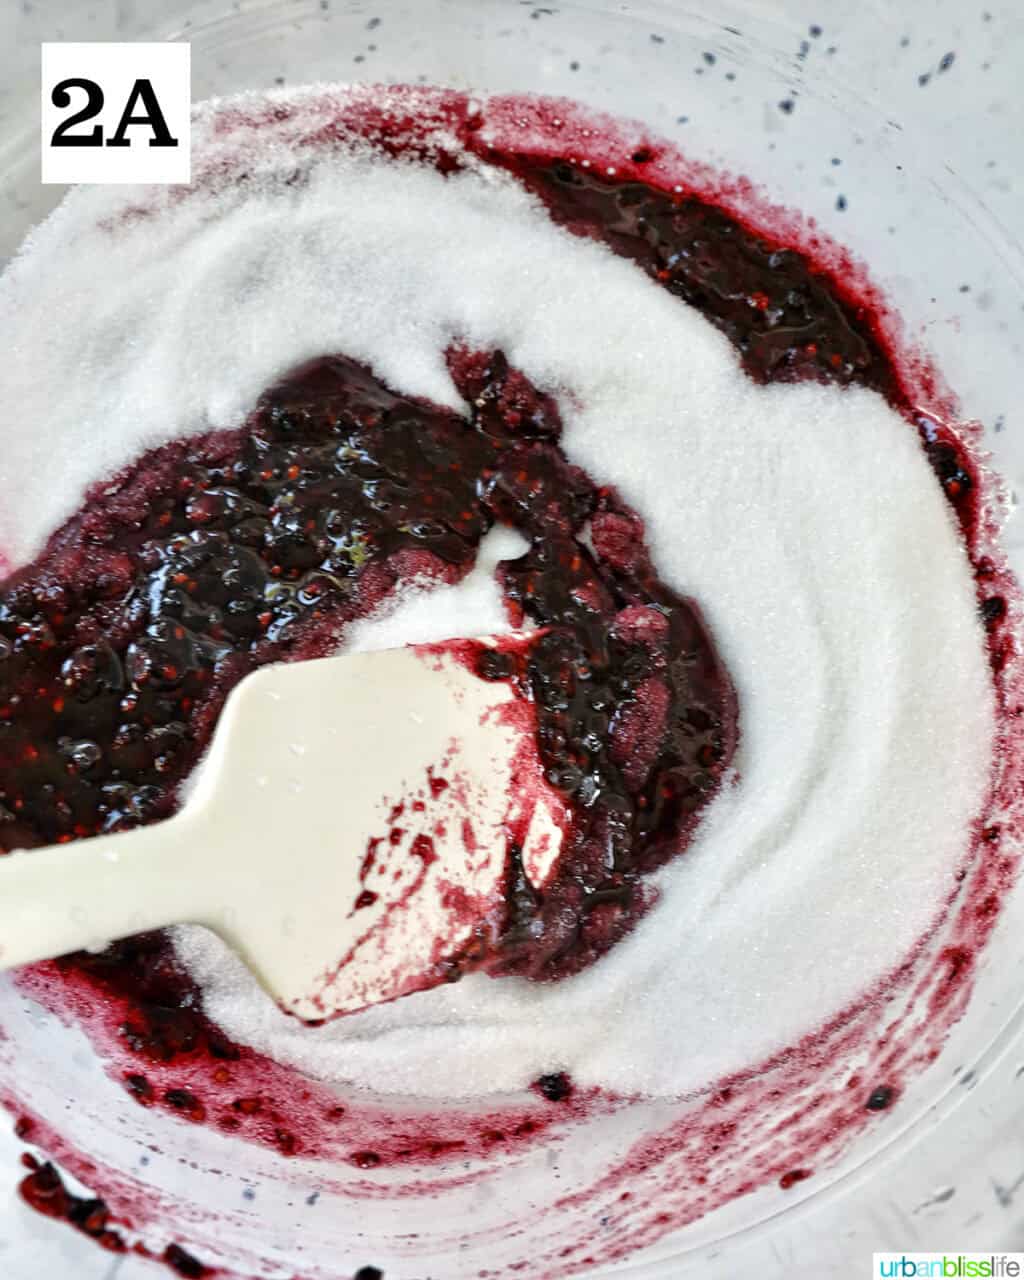 spatula swirling blackberry jam and sugar.